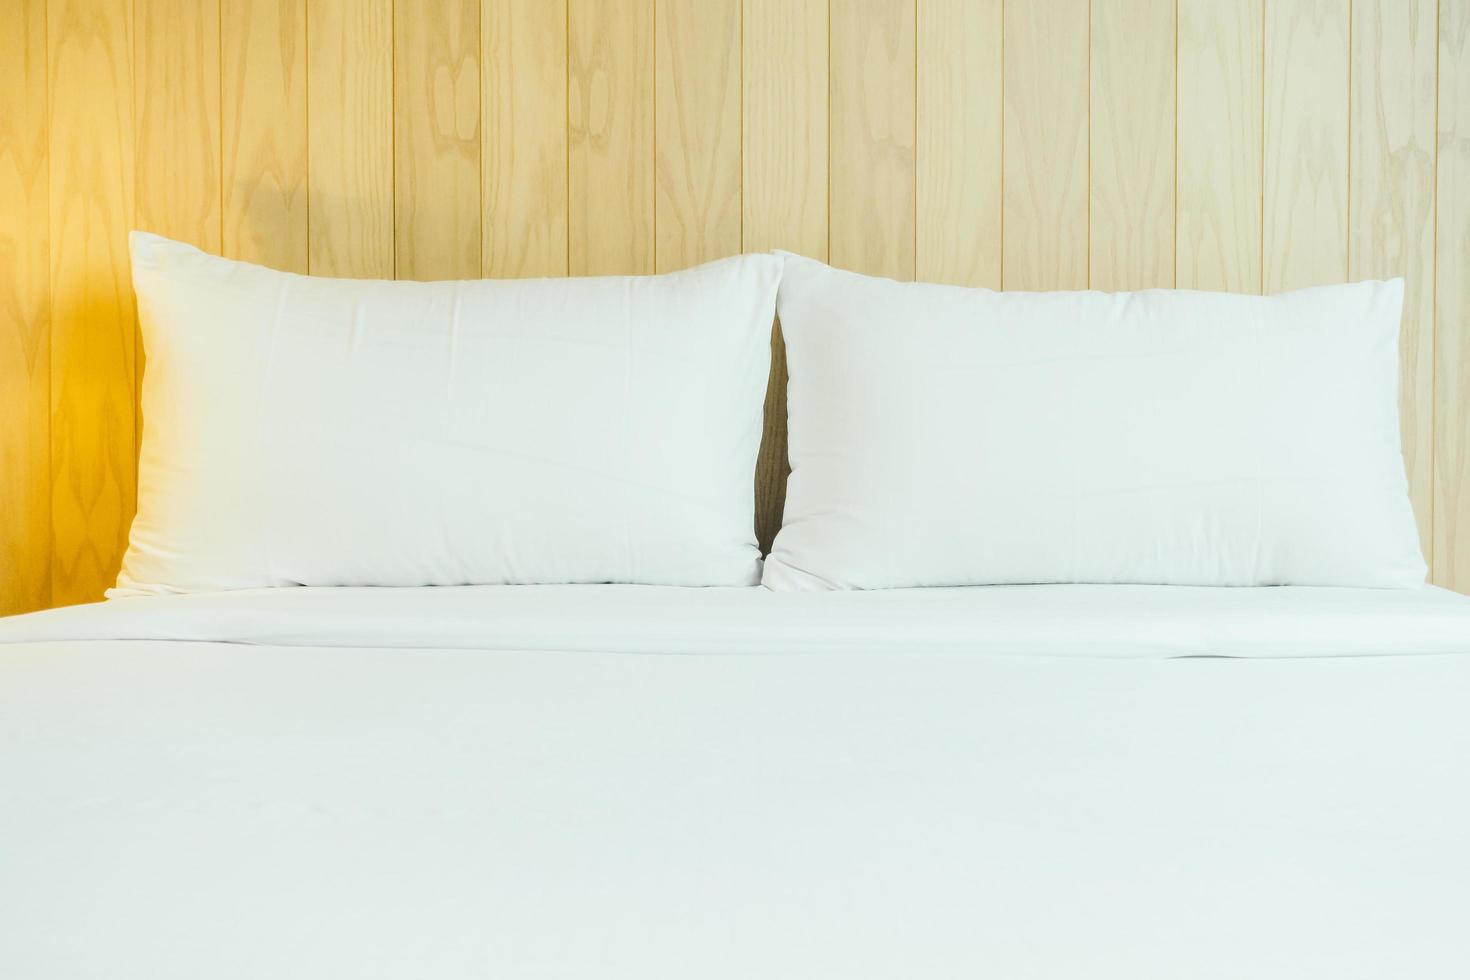 travesseiro branco na cama foto